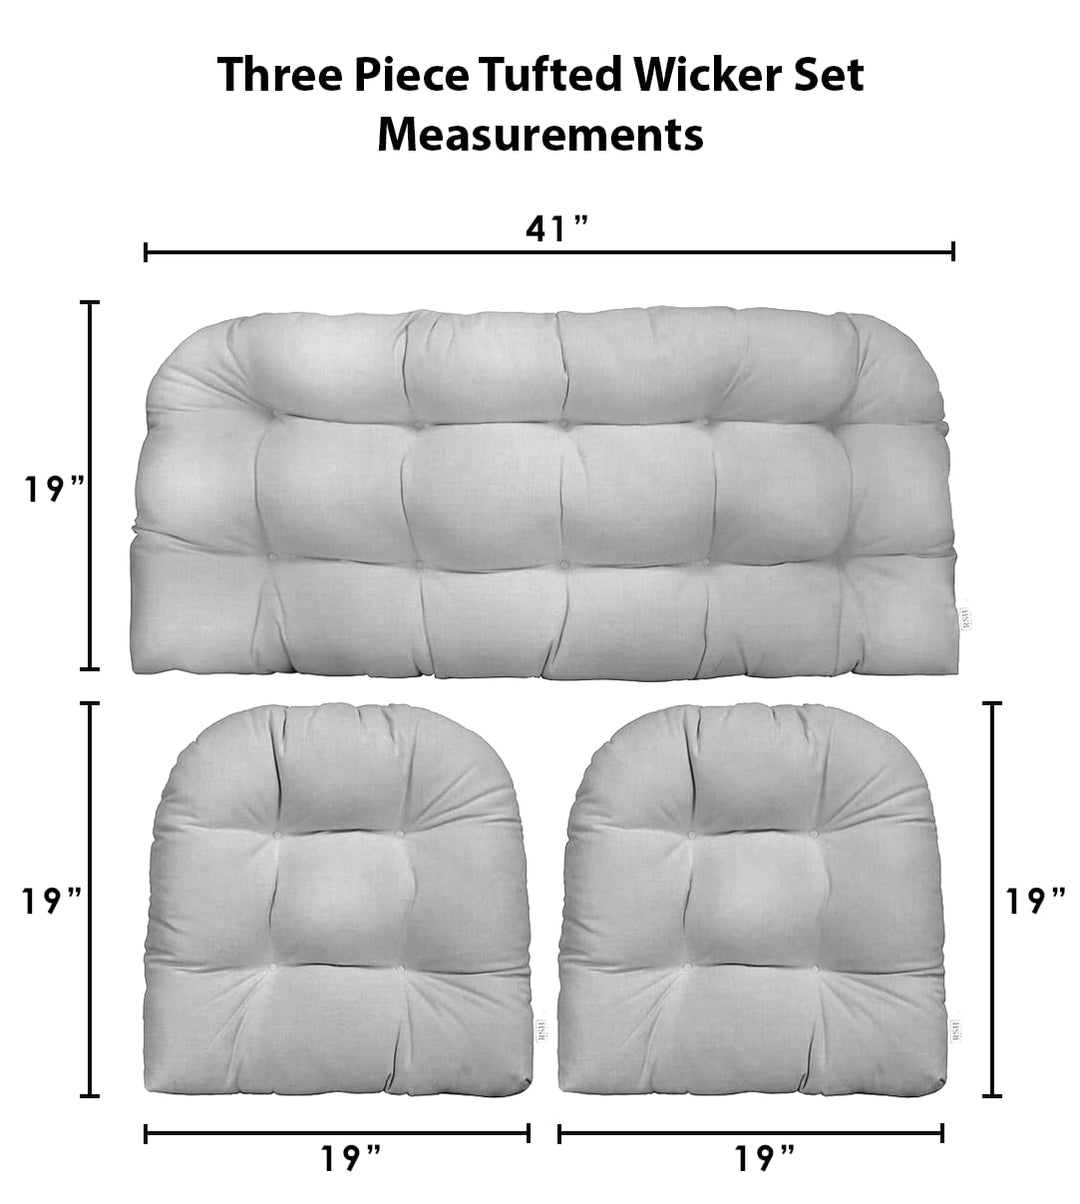 3 Piece Wicker Cushion Set, Tufted, 41" W x 19" D, 19" W x 19" D, Coral and White Stripe - RSH Decor